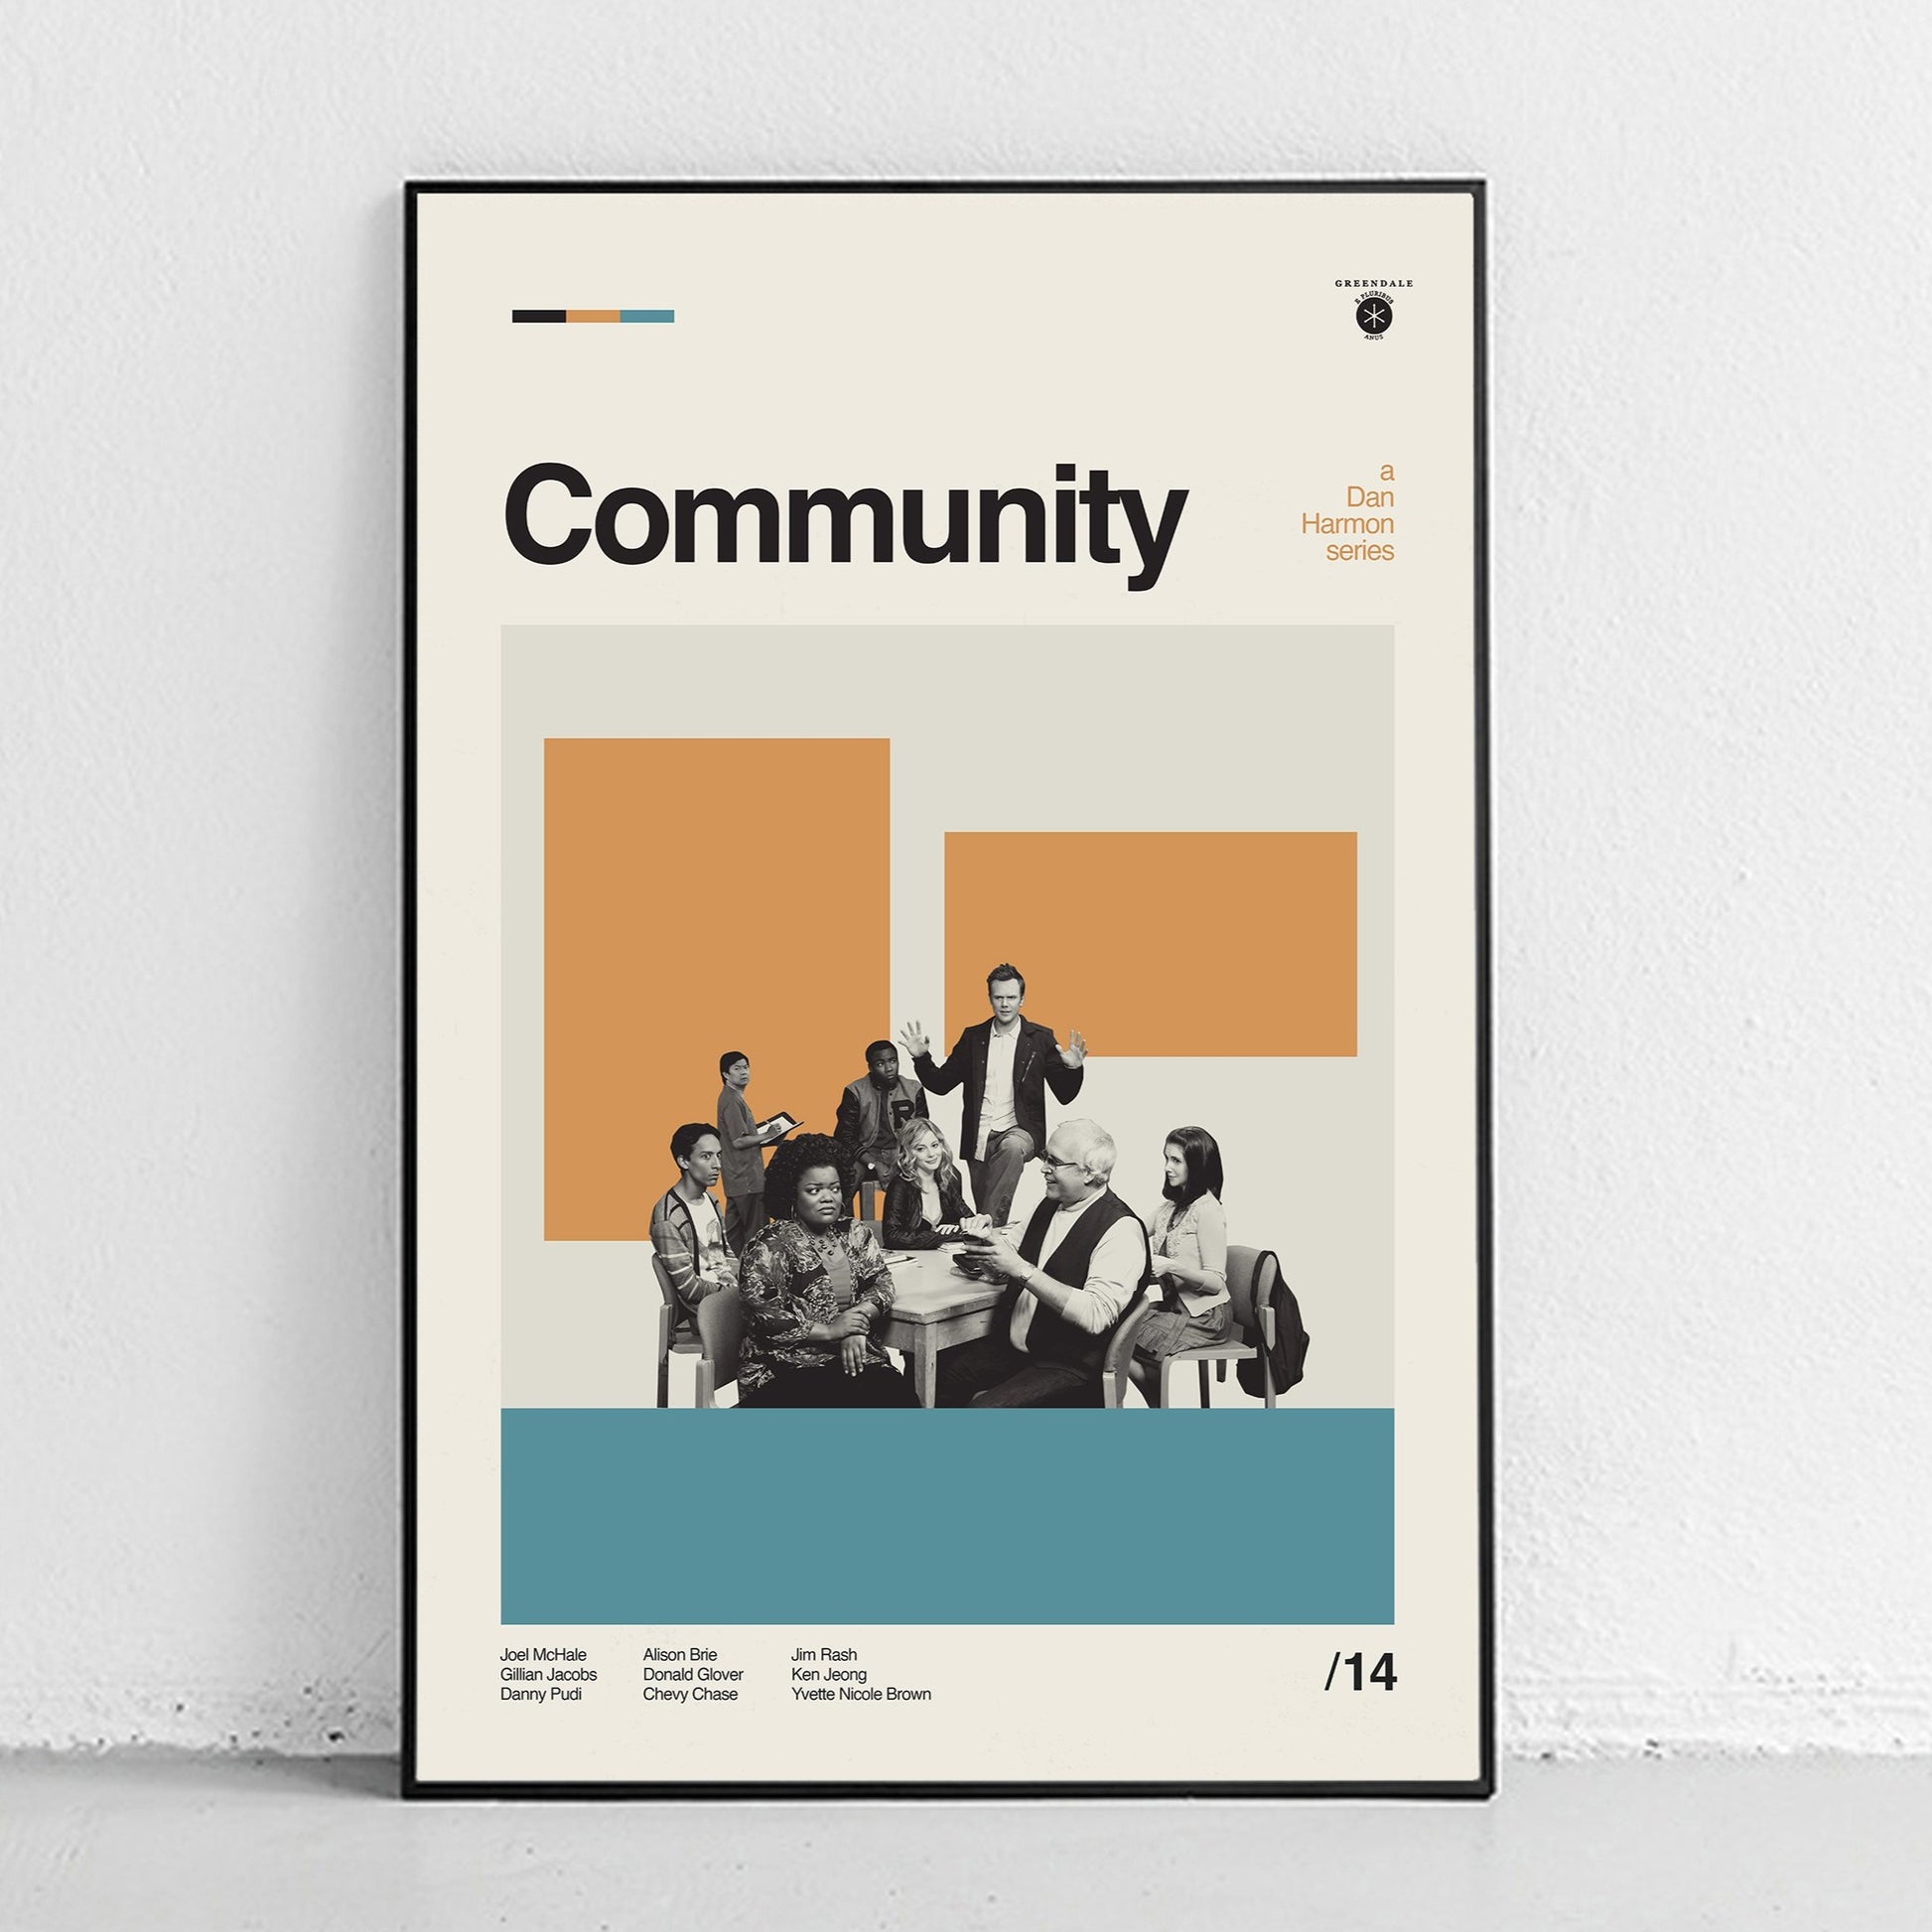 Community Poster - Dan Harmon - Greendale - Midcentury modern home ...